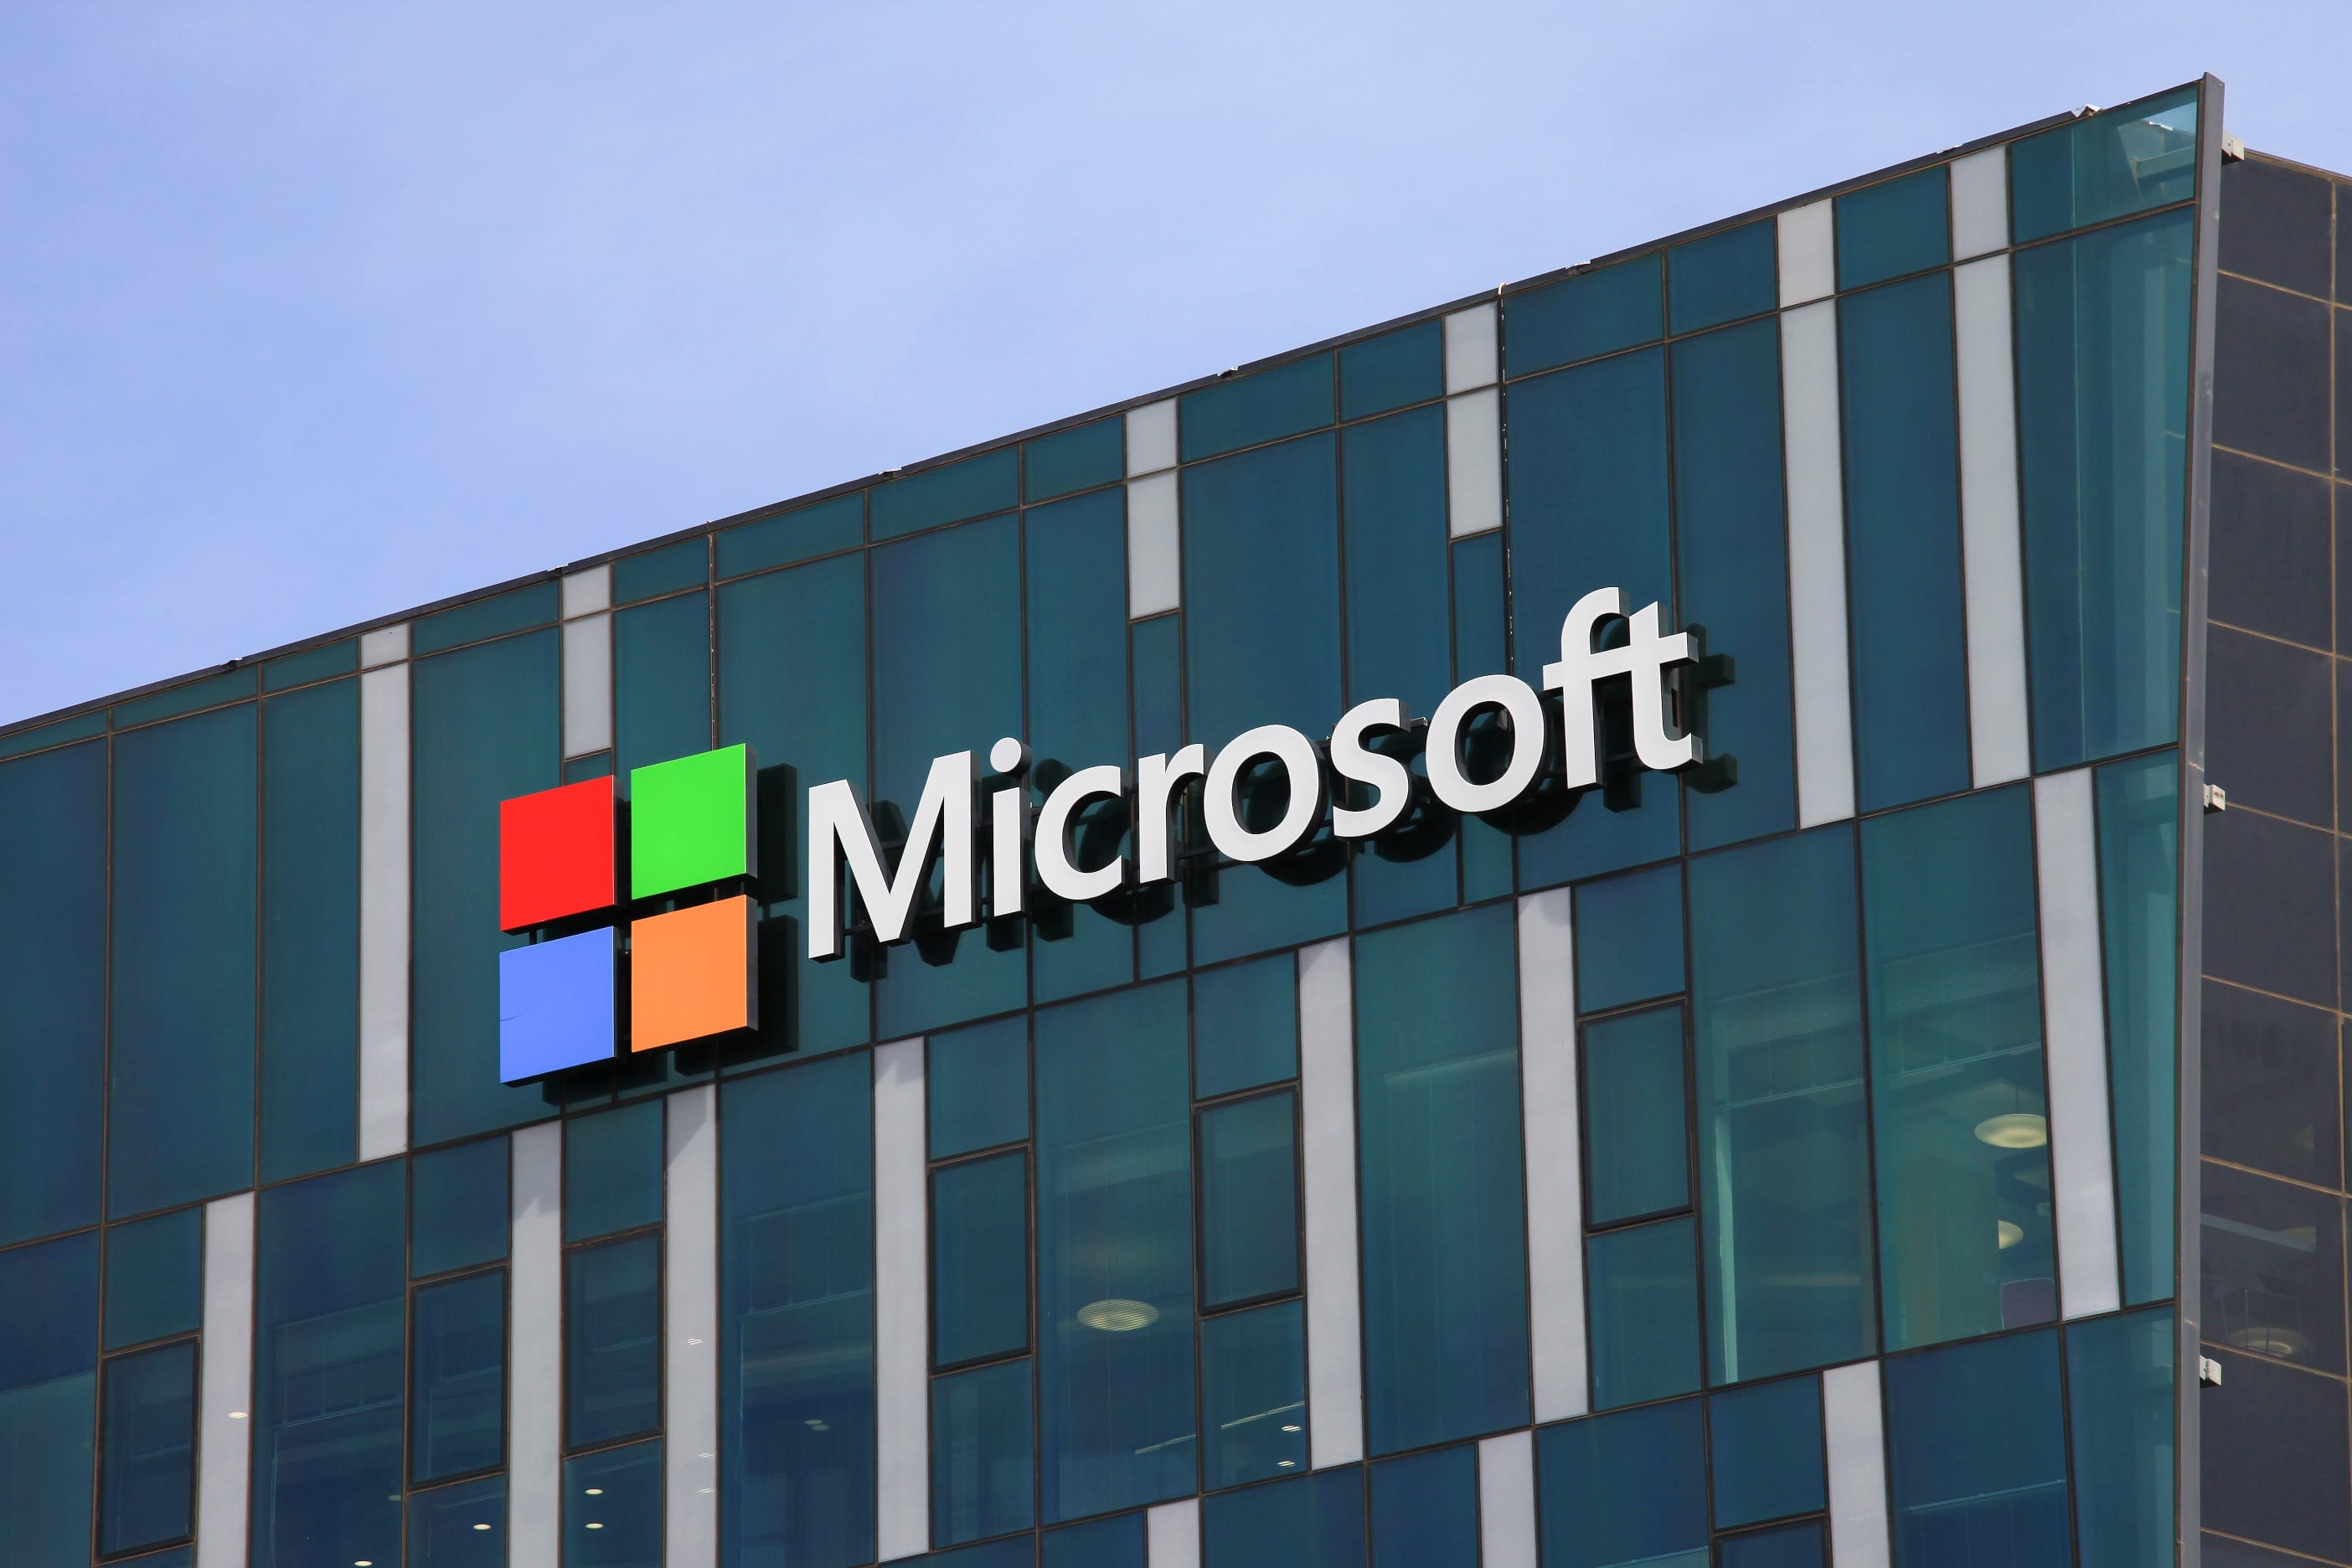 Will Microsoft Go the Way of Blockbuster?